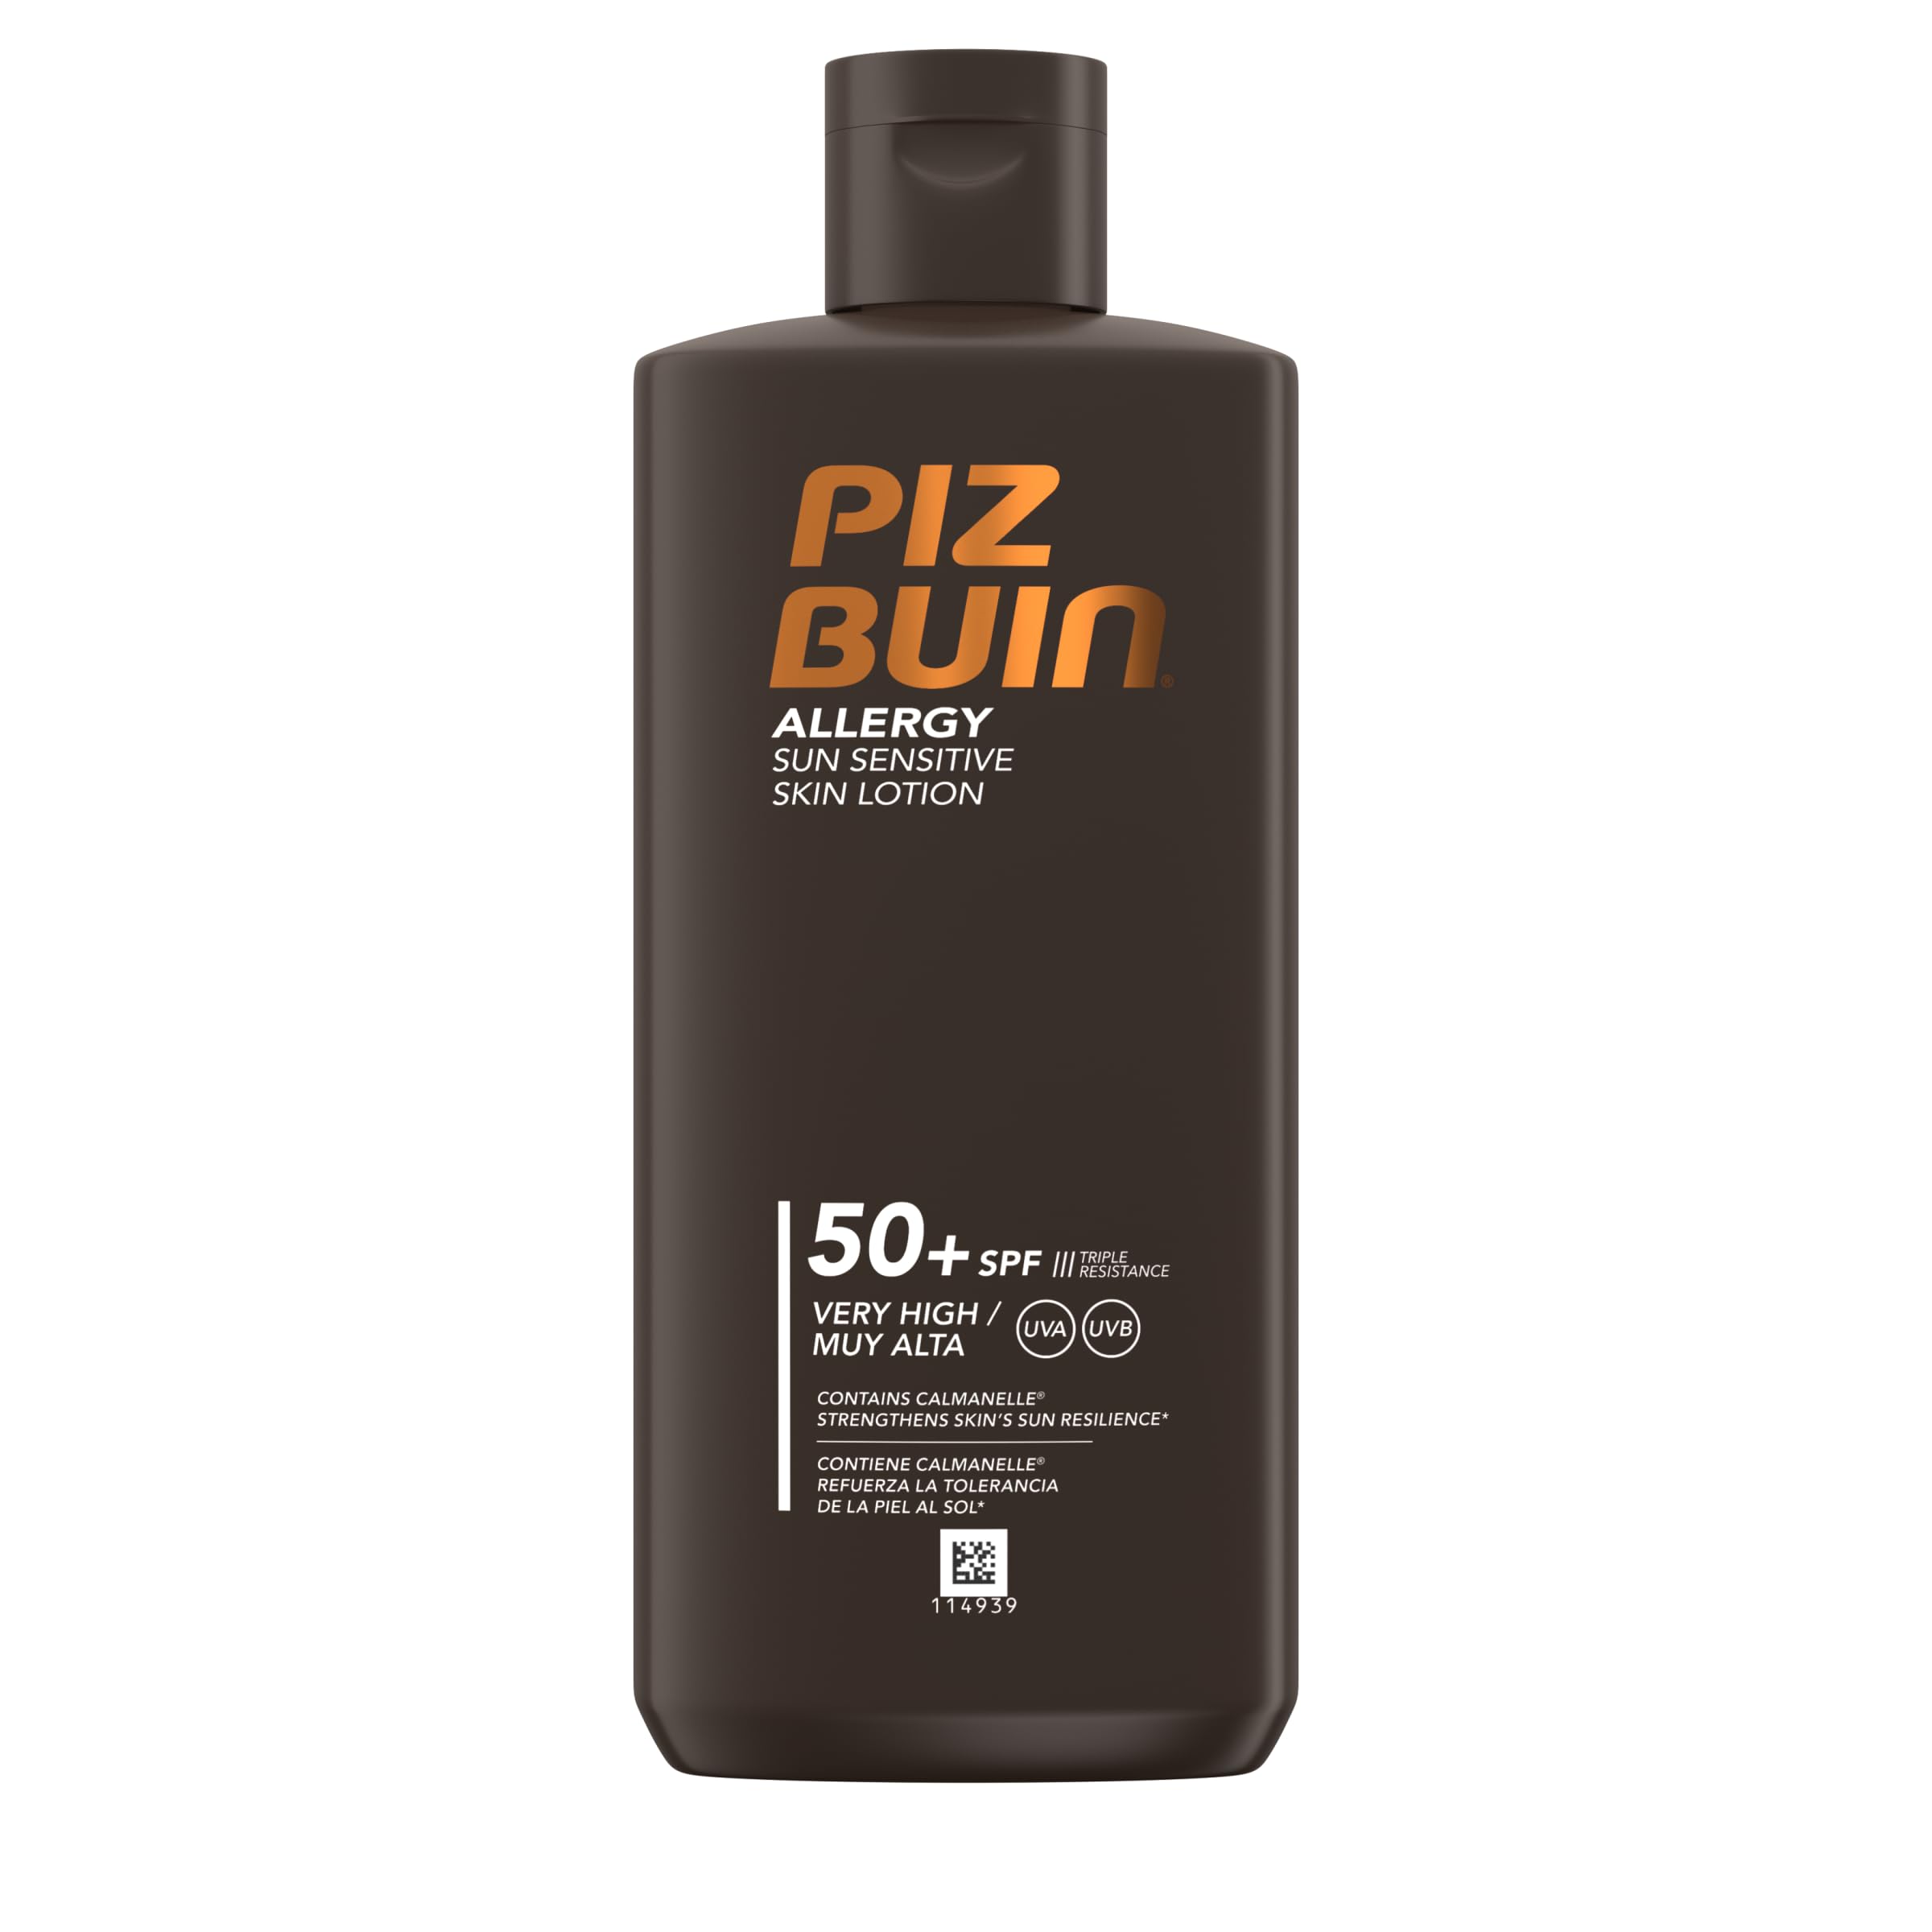 PIZ BUIN Allergy Sun Sensitive Skin Lotion SPF50